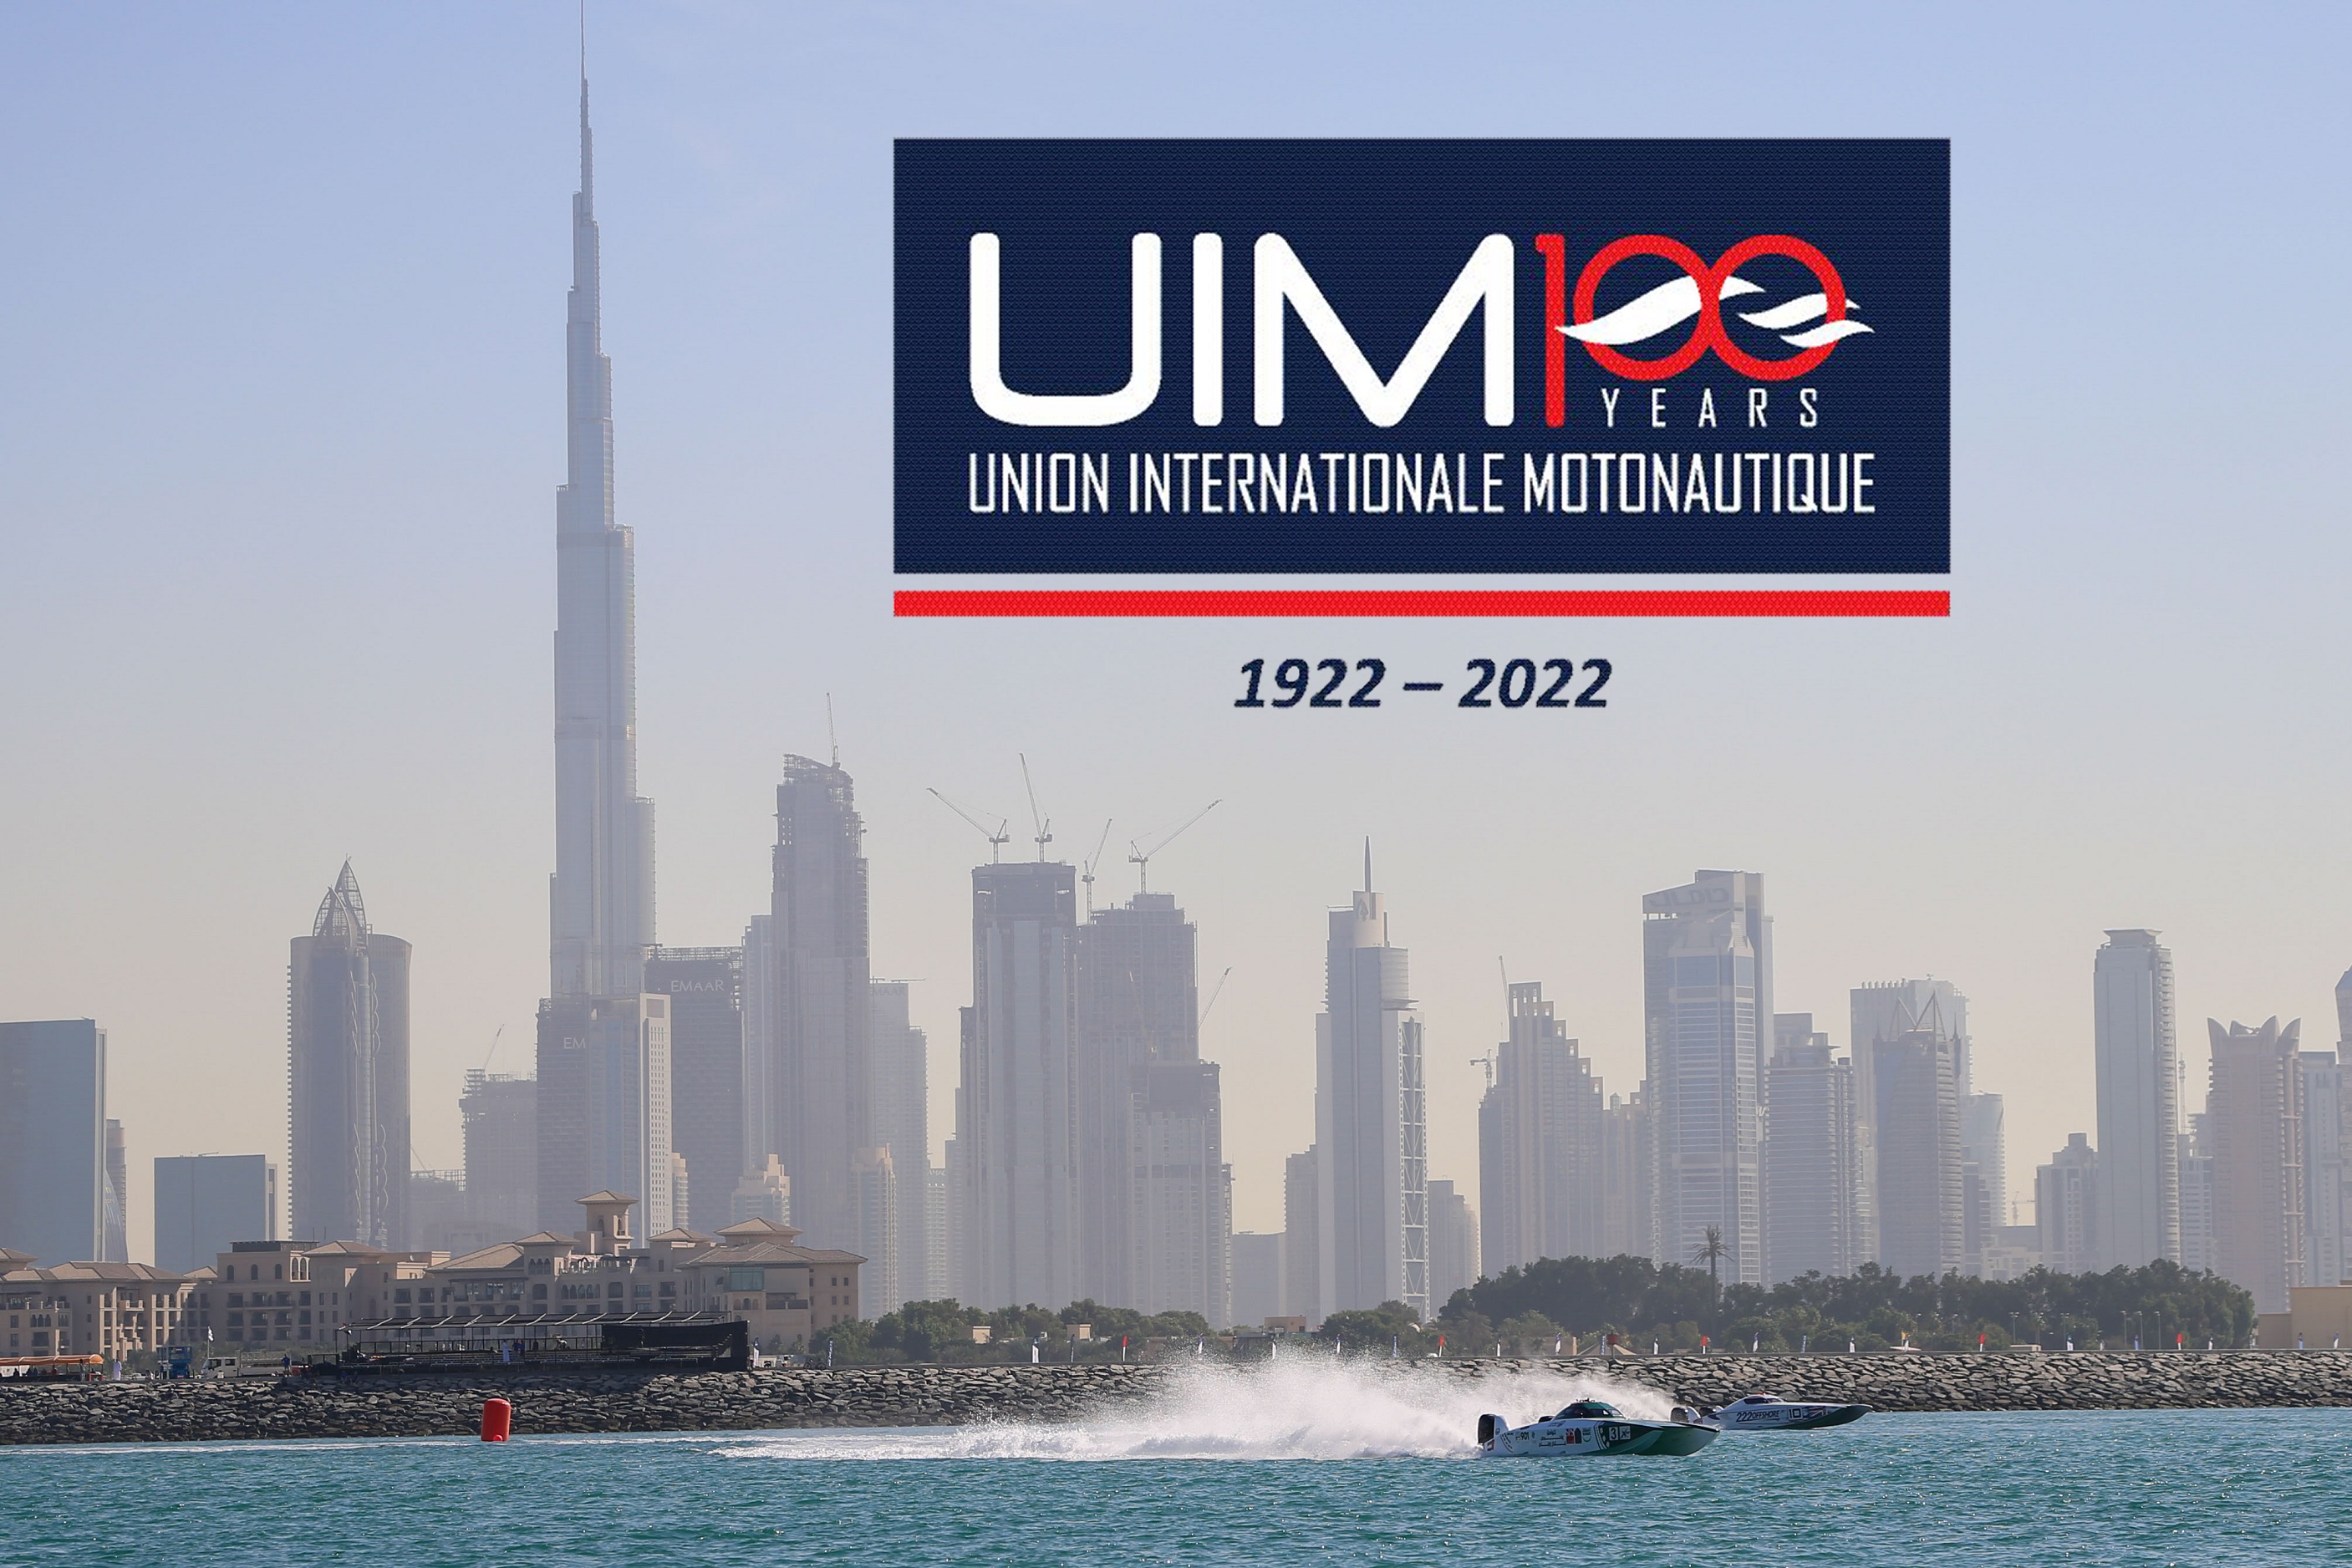 DIMC congratulates UIM on 100th anniversary